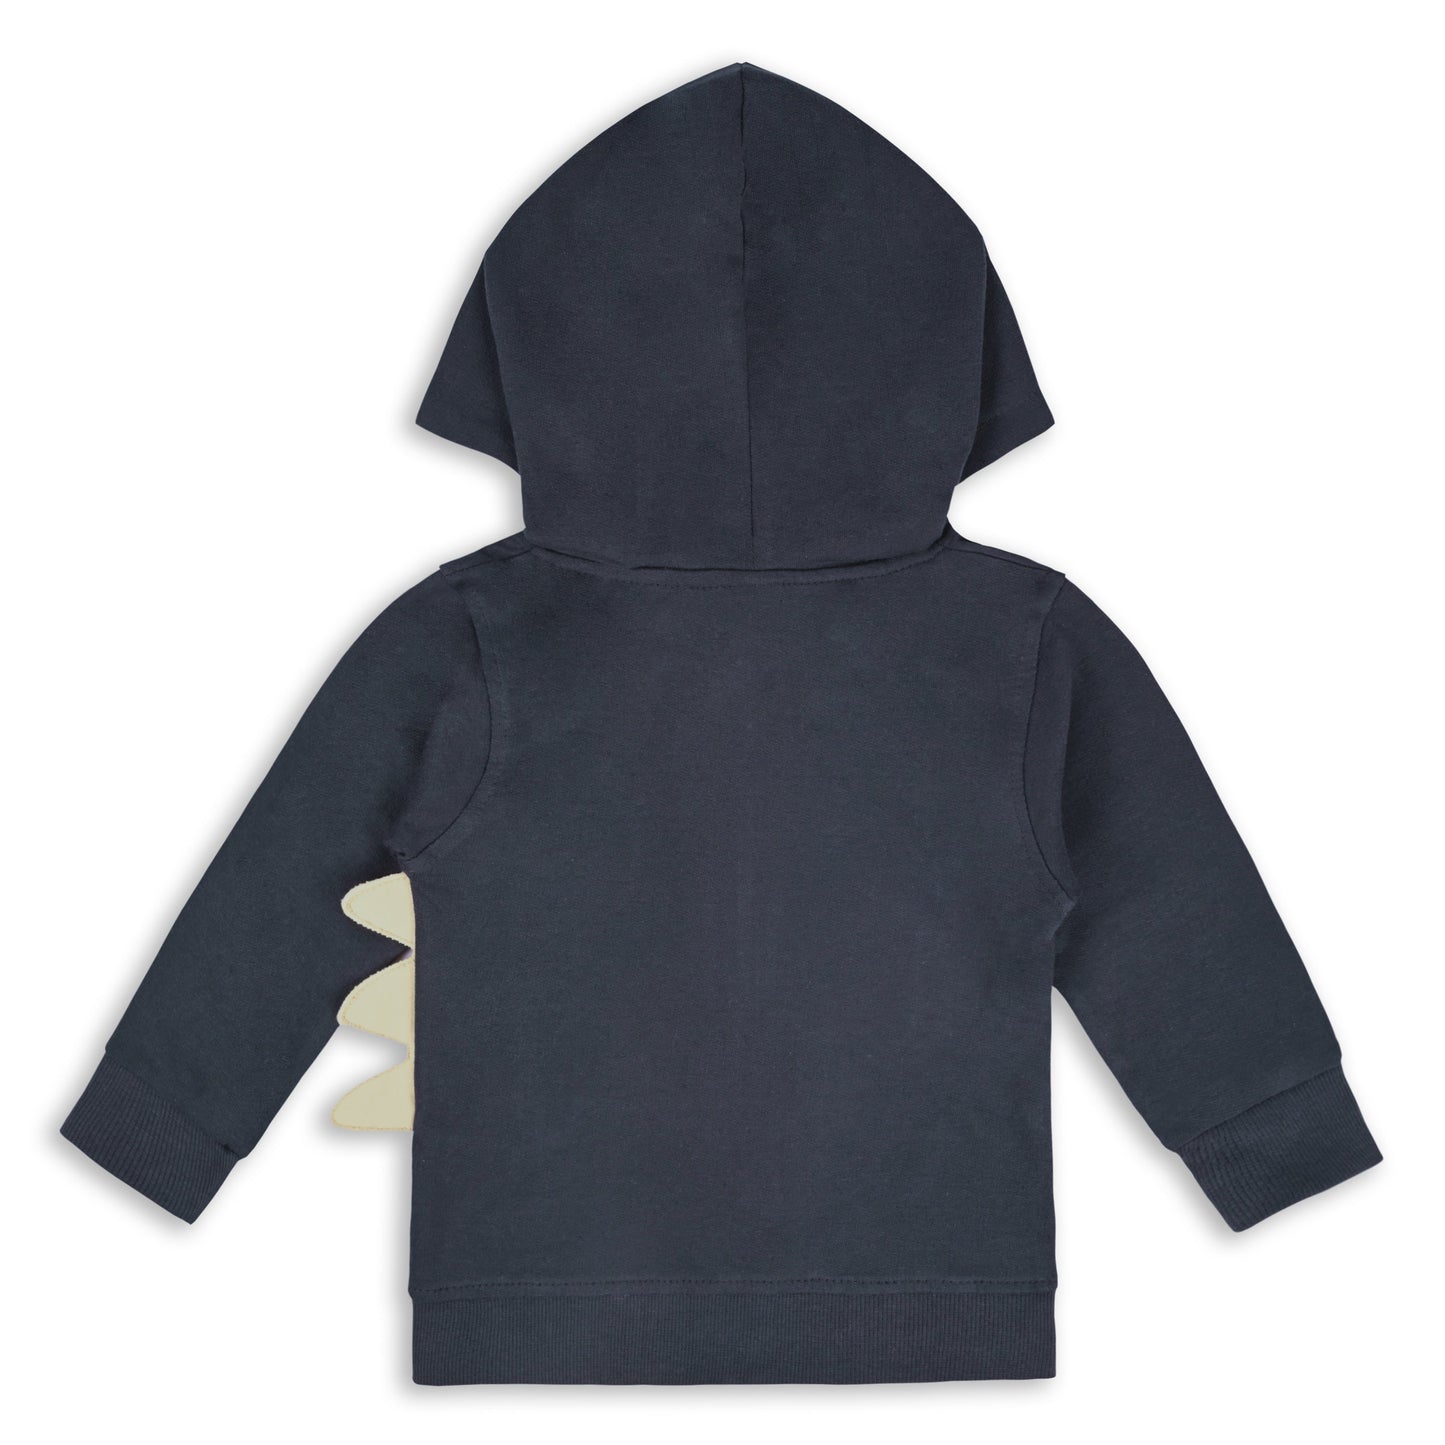 Wishkaro Unisex Cotton Applique Full Sleeve Hooded Sweatshirt-T304dgry